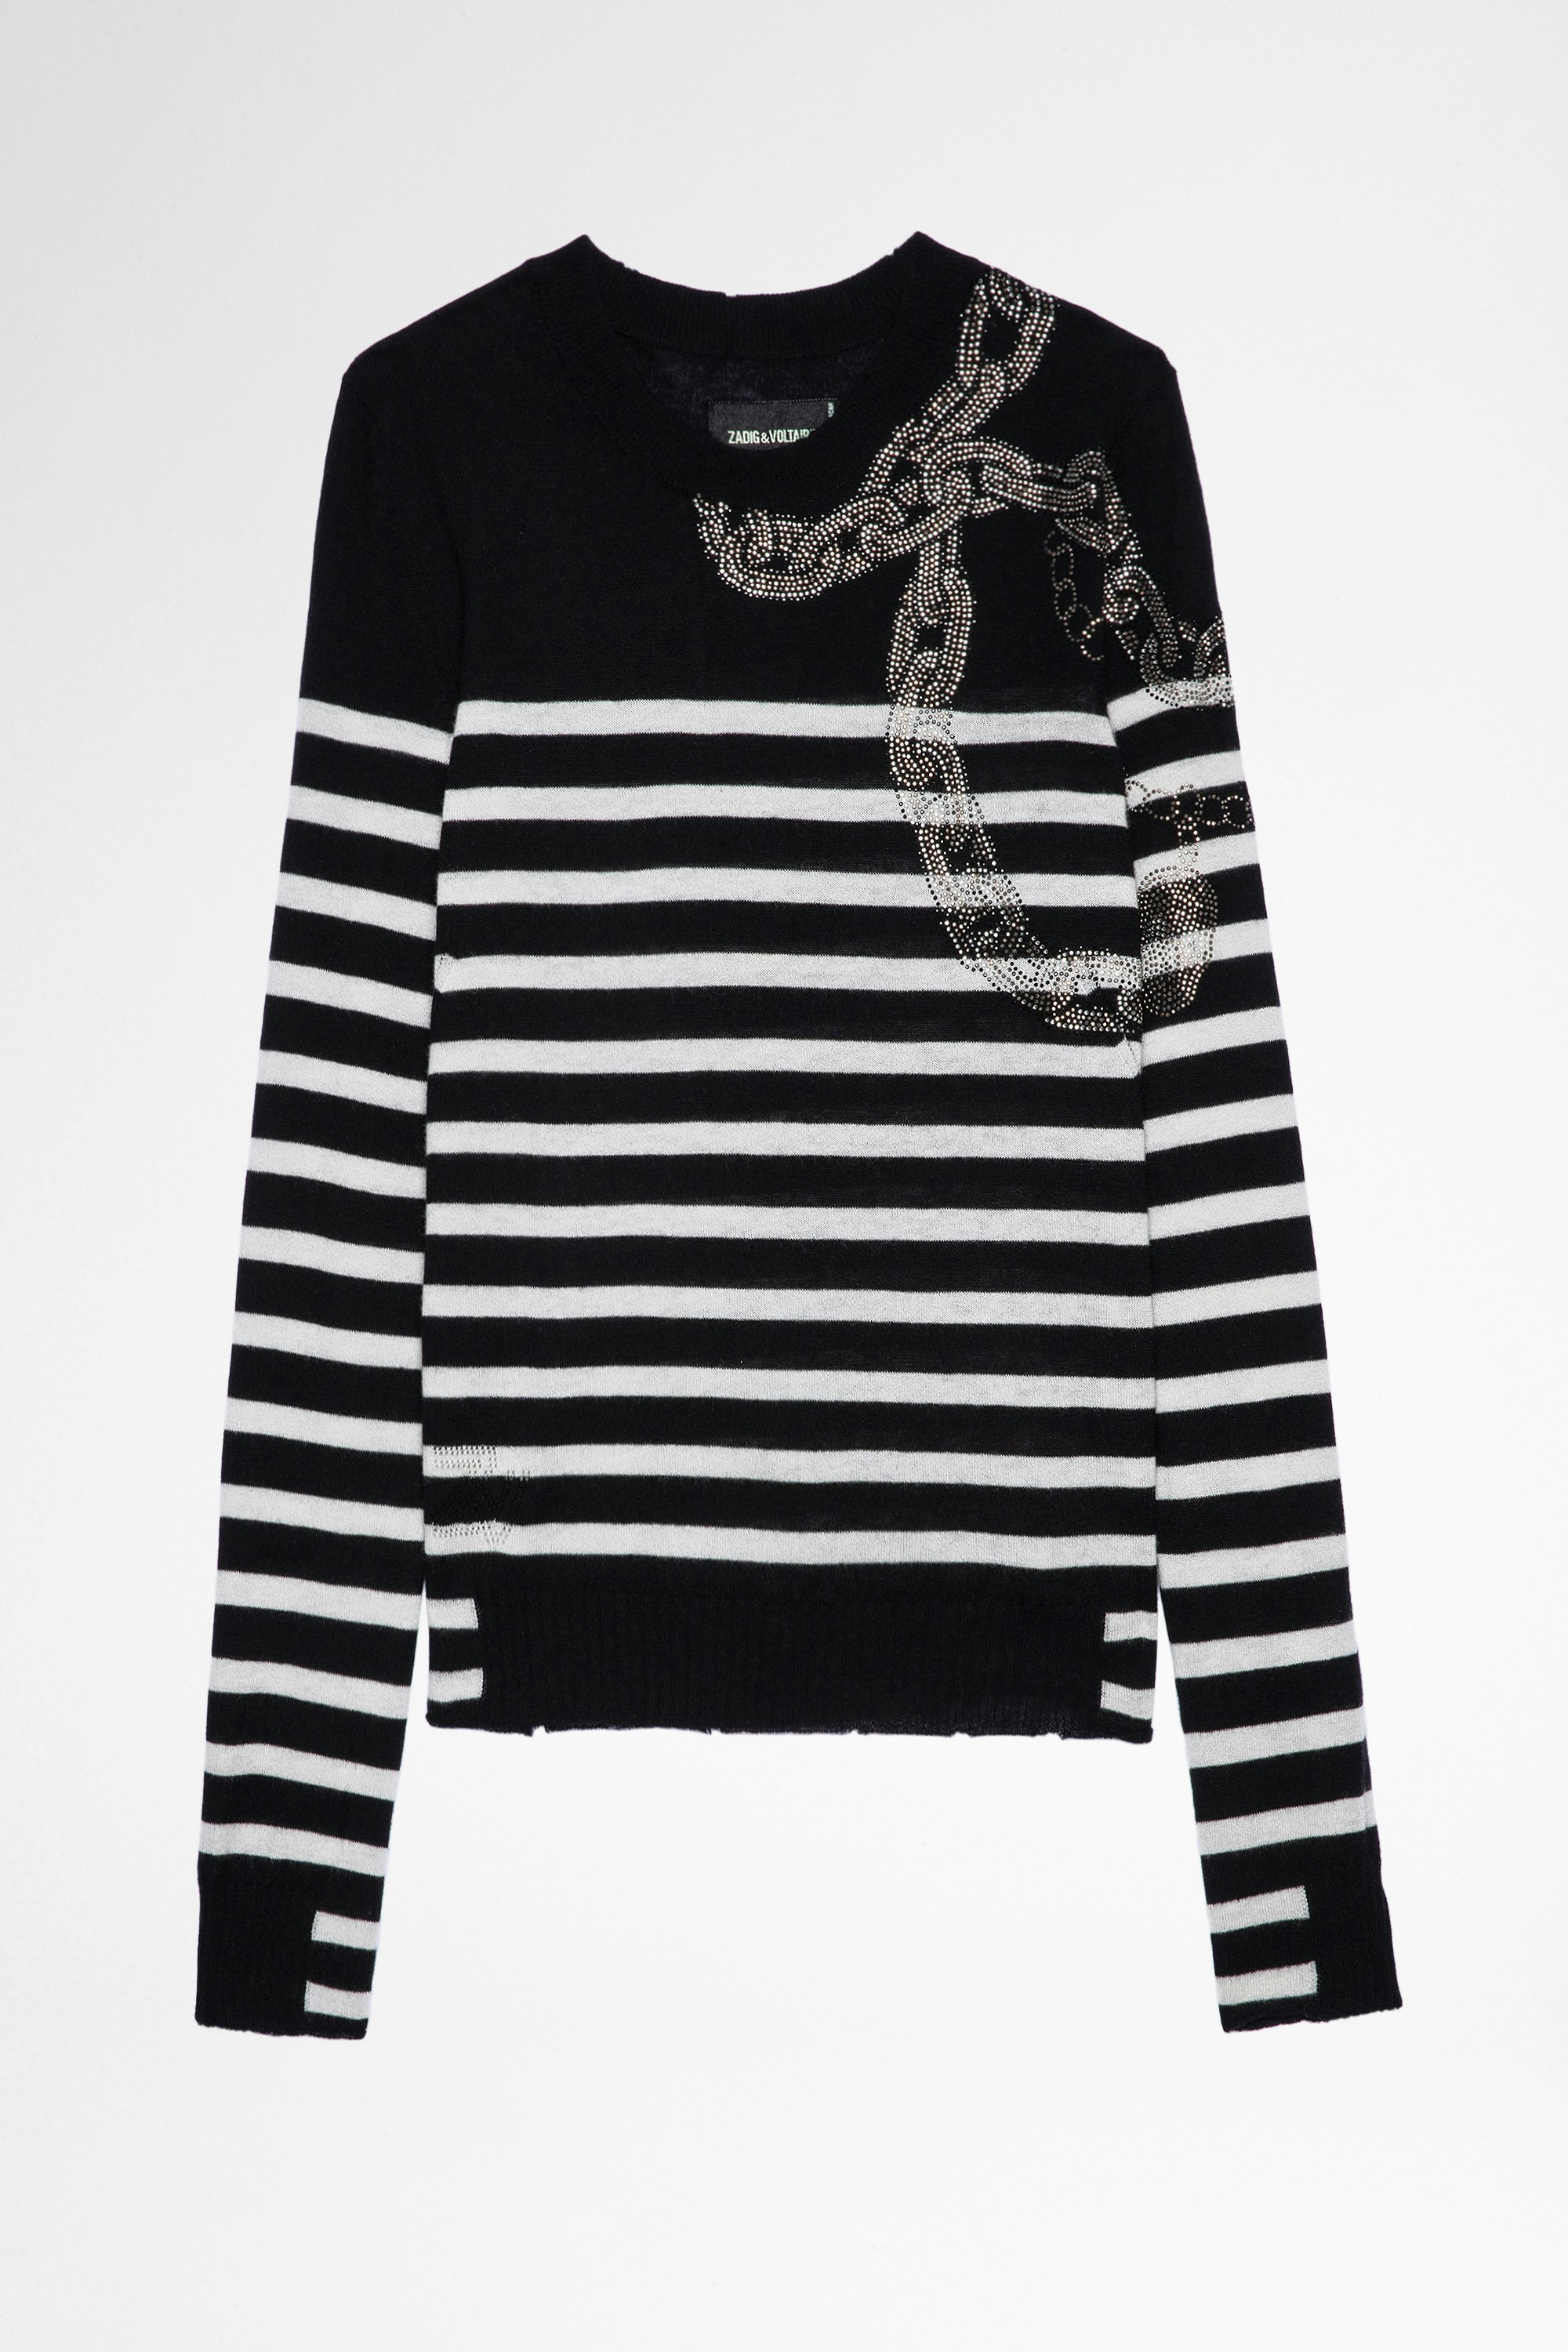 Source Sweater Women's black striped cashmere sweater with rhinestones